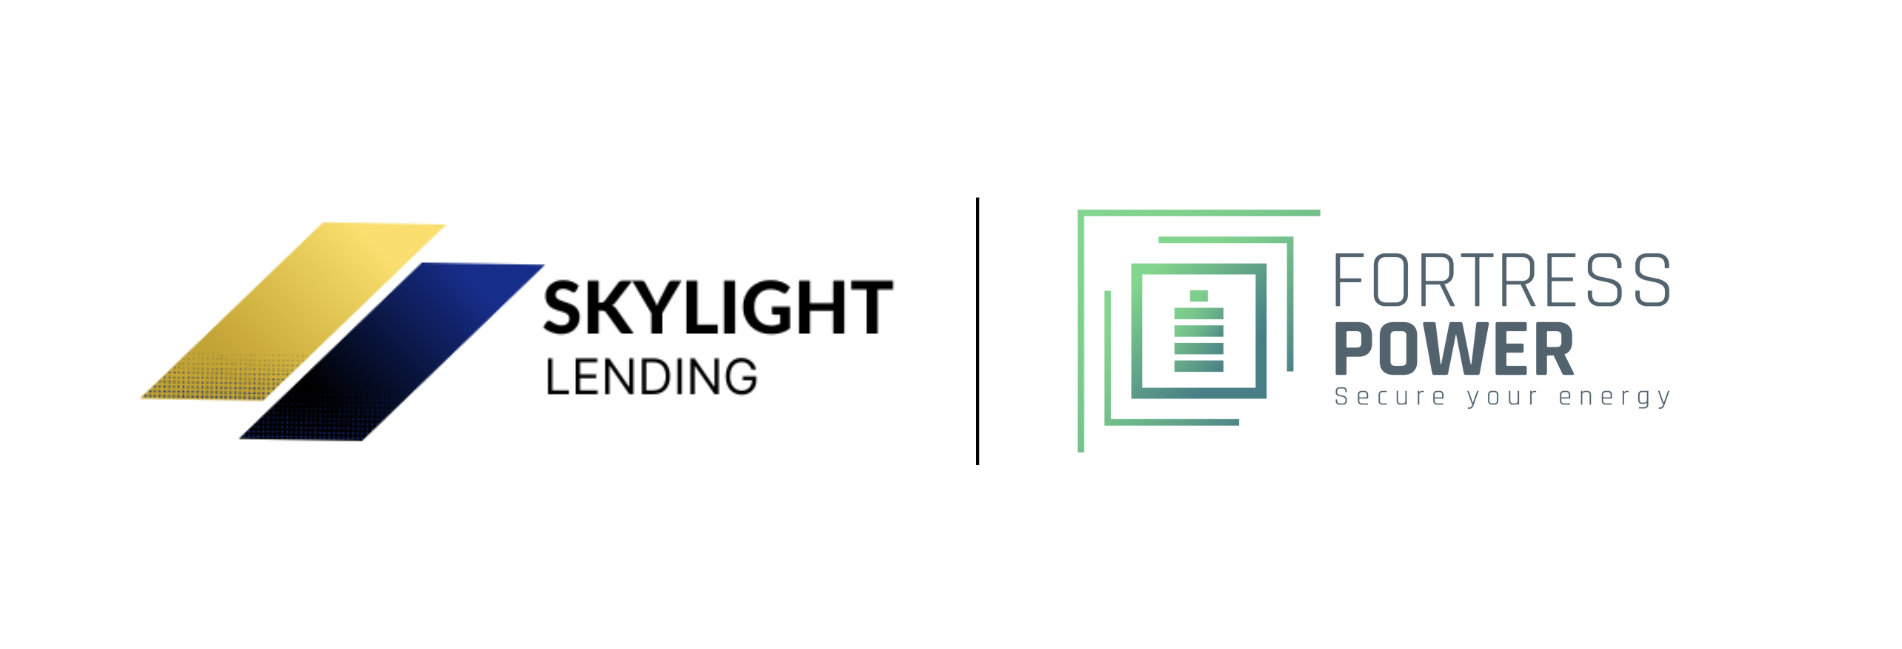 Skylight Lending Fortress Power Partnership e1713974676964